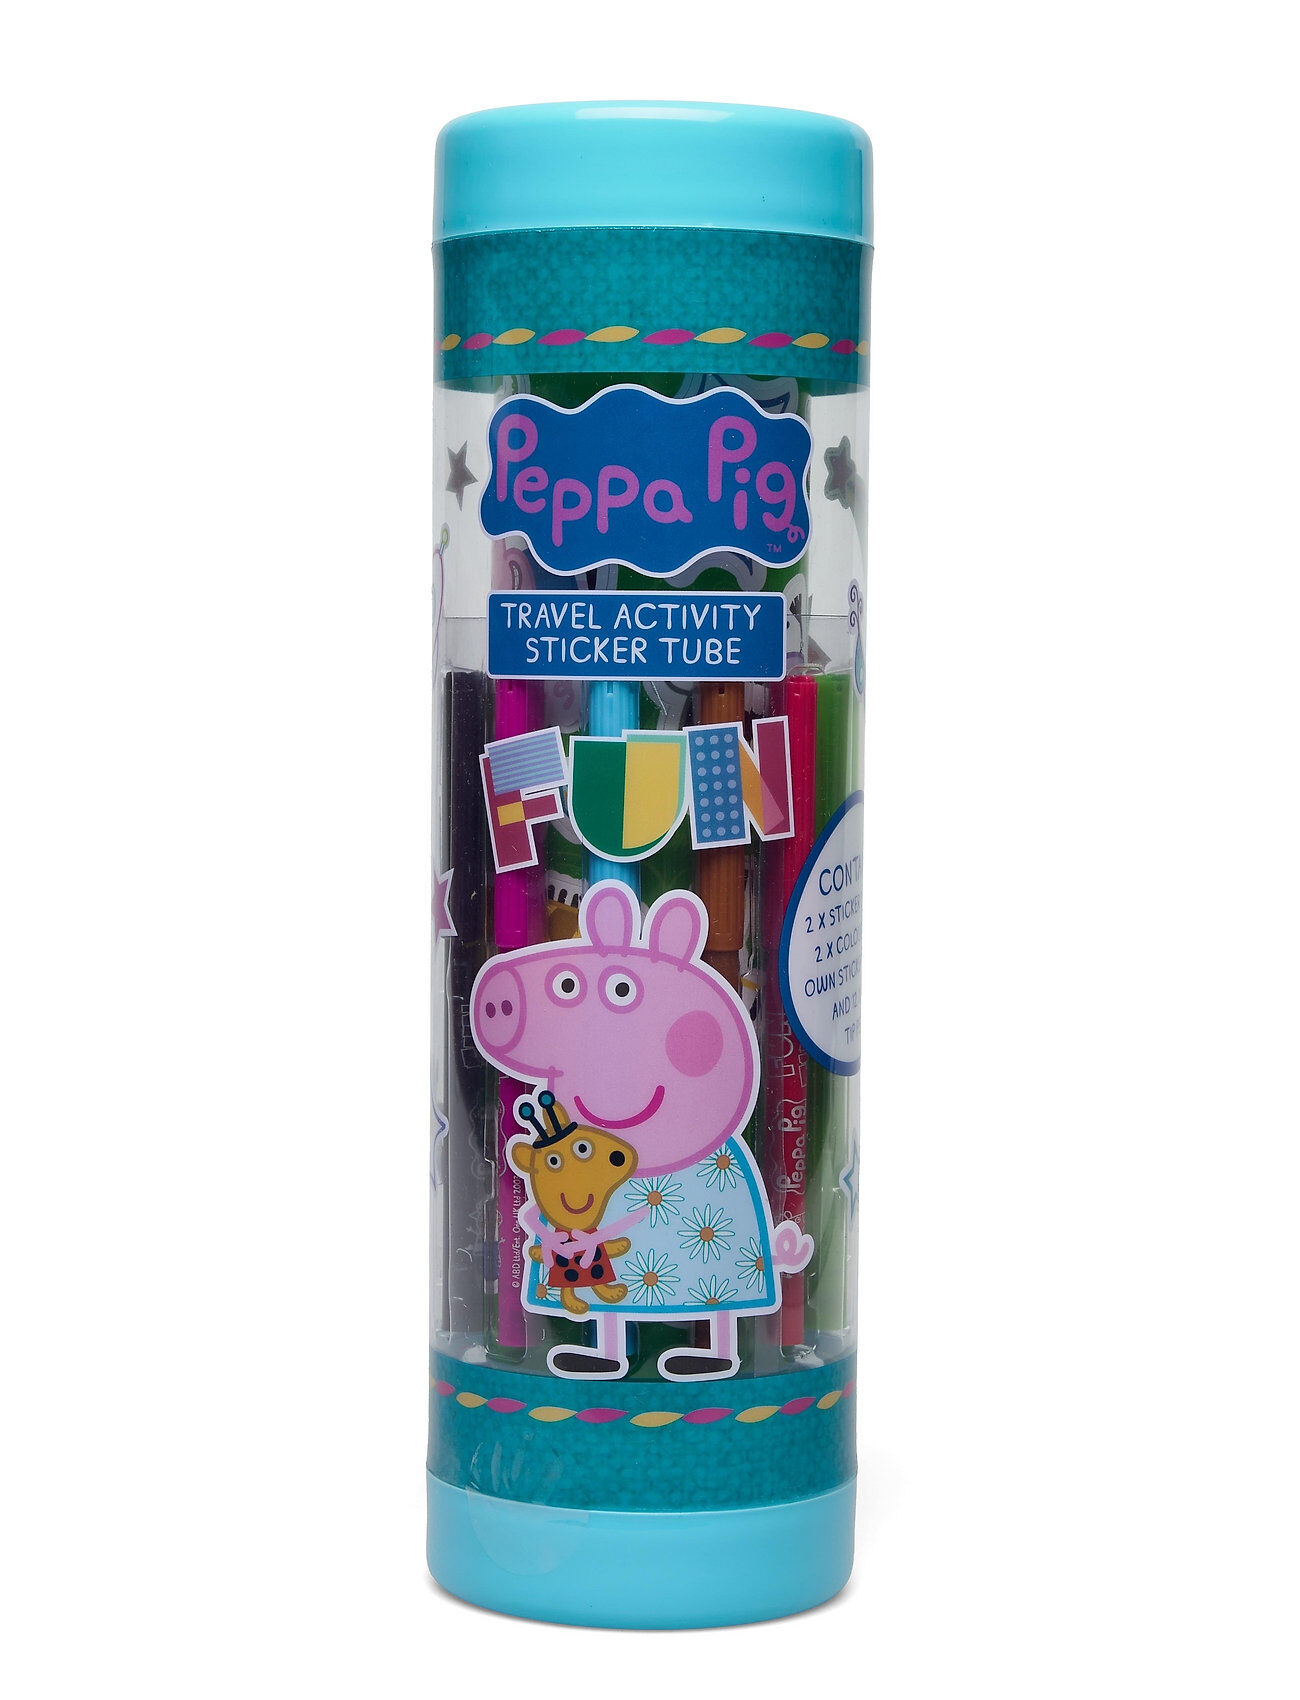 Euromic Peppa Pig Travel Act Sticker Tube Toys Creativity Stati Ry Multi/mønstret Euromic